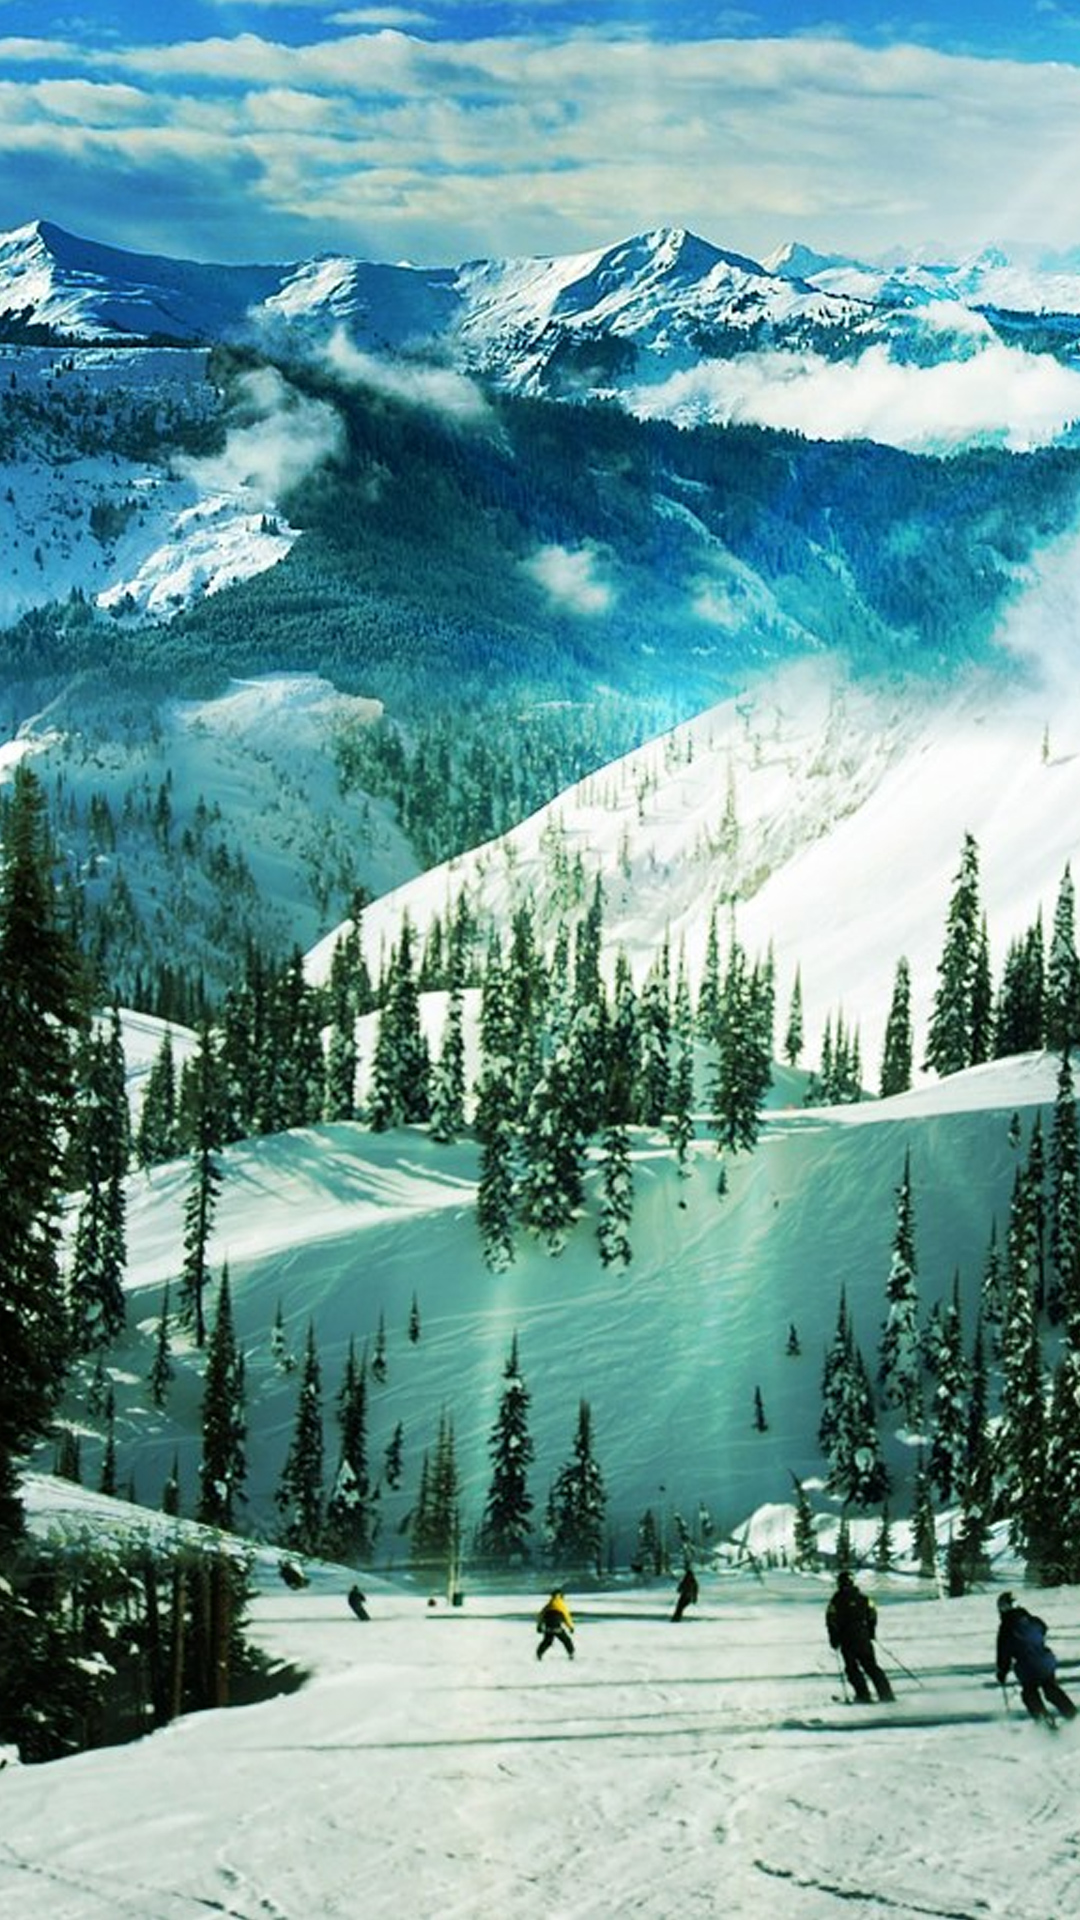 Ski-Slope-Paradise-Winter-Landscape-iPhone-6-Plus-HD-Wallpaper.